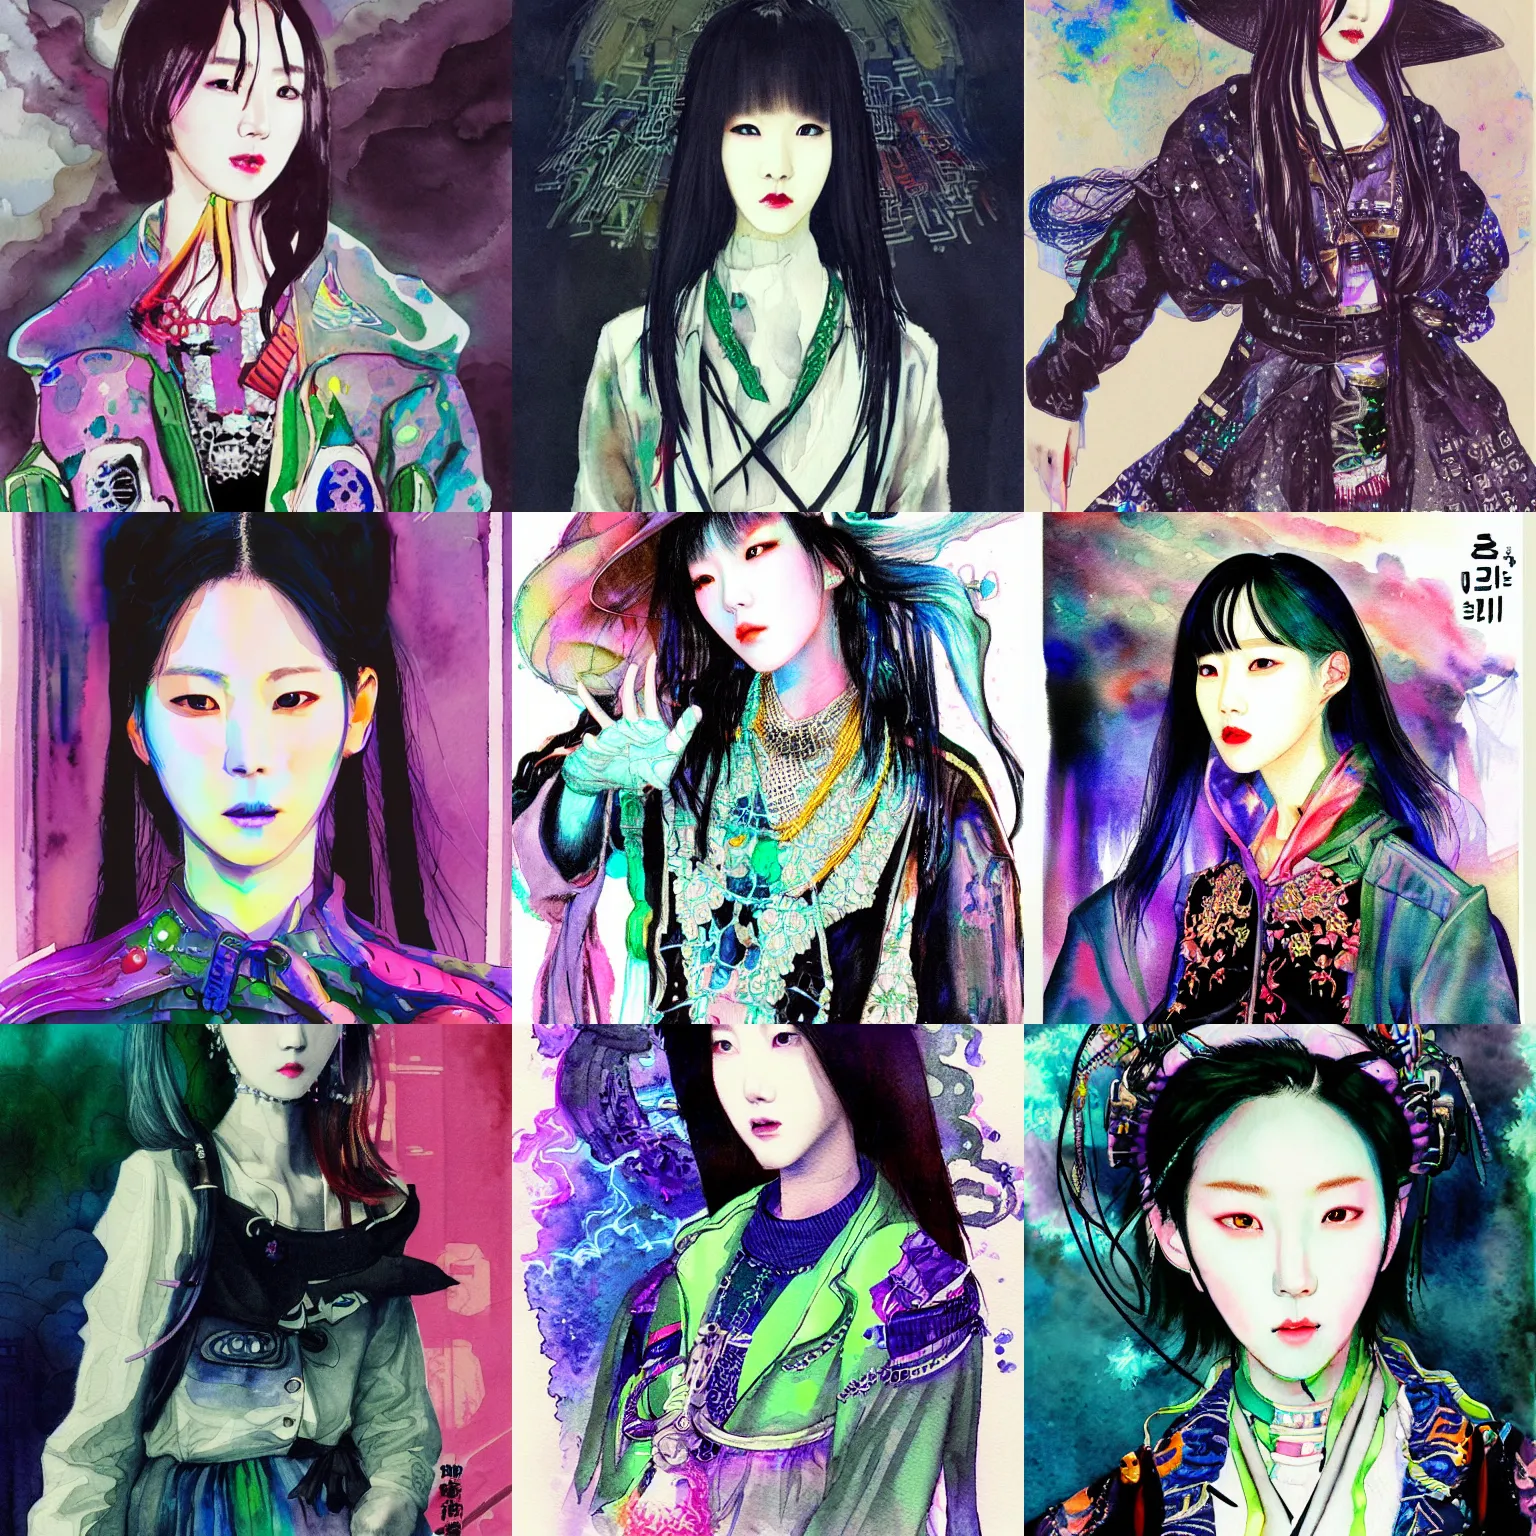 Prompt: korean women's fashion machine witch, intricate watercolor cyberpunk vaporwave portrait by john singer sargent